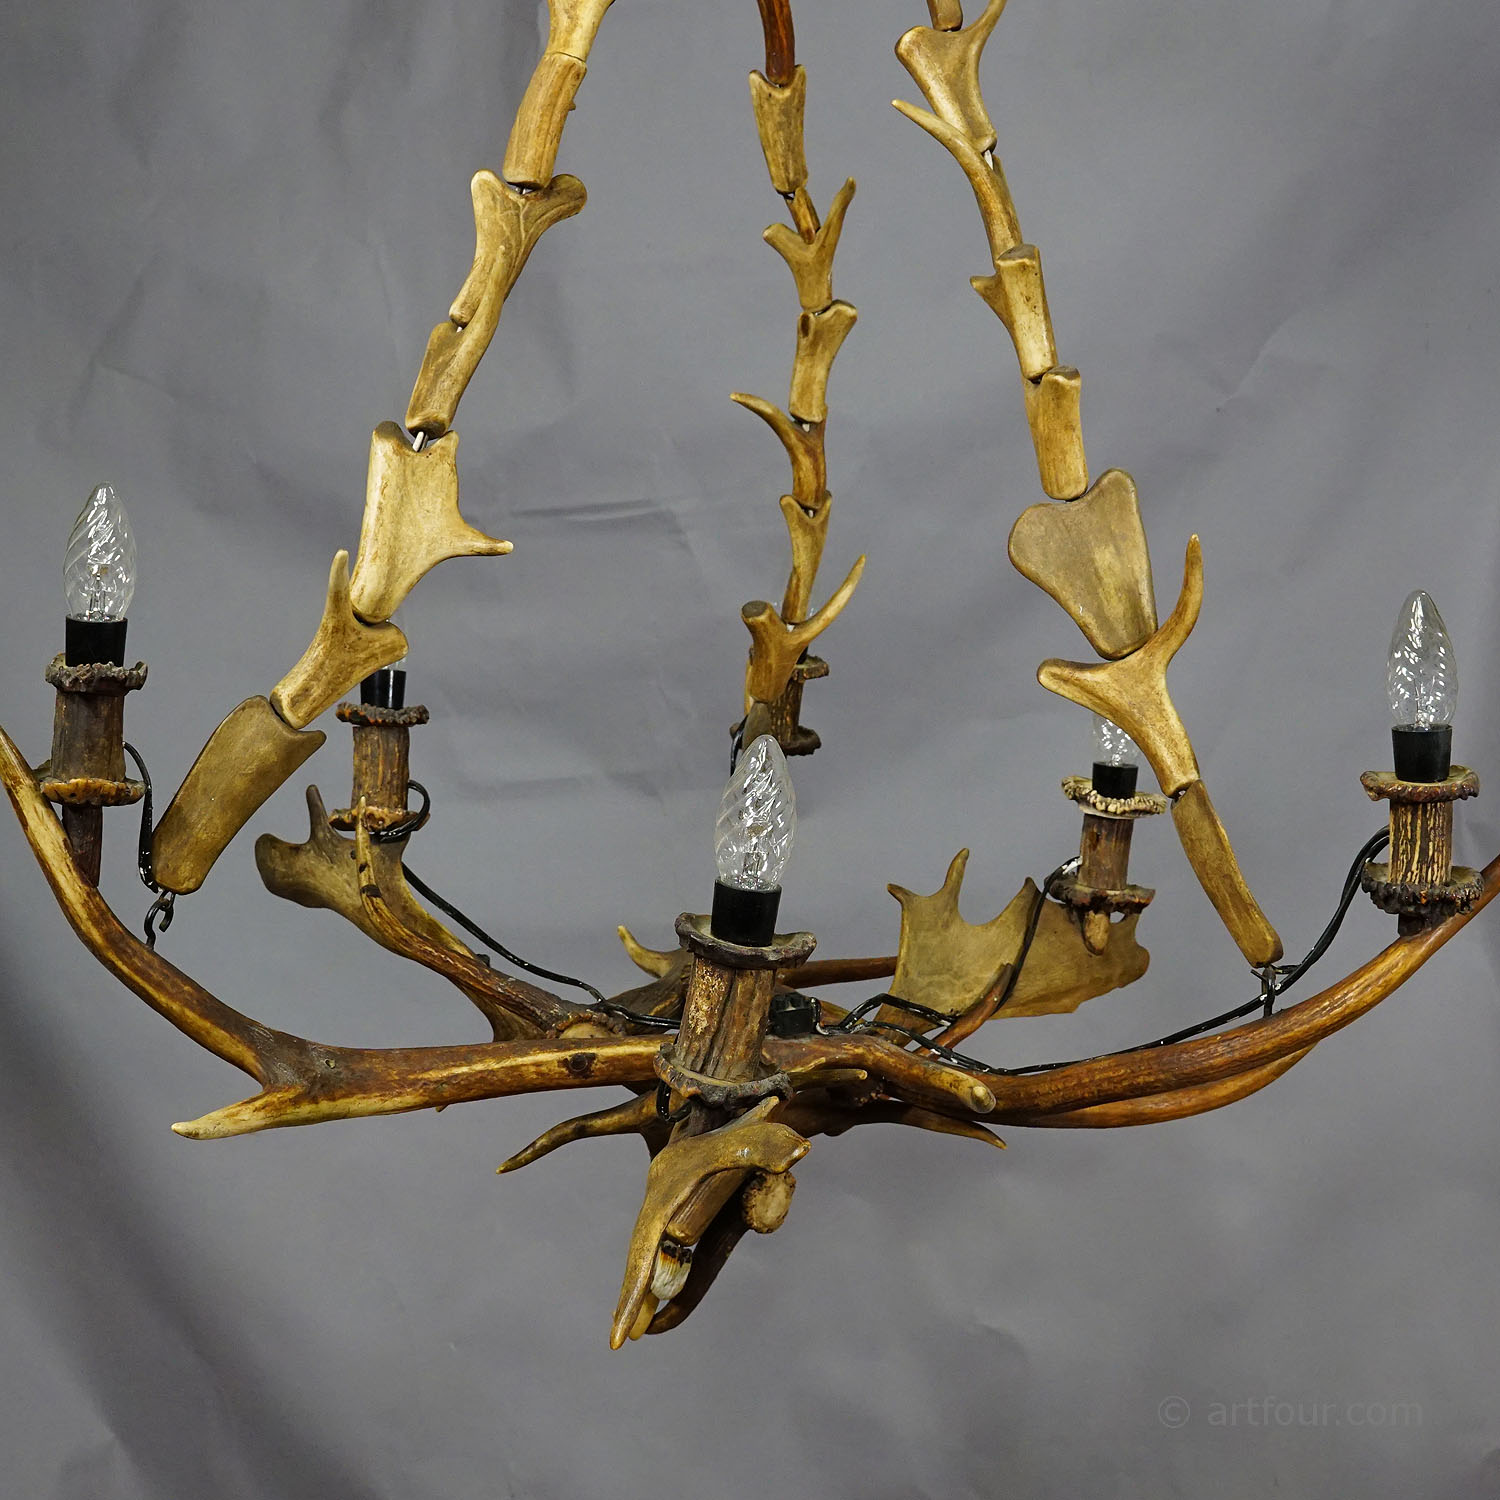 Large Rustic Antler Lamp with Fallow Deer and Deer Antlers